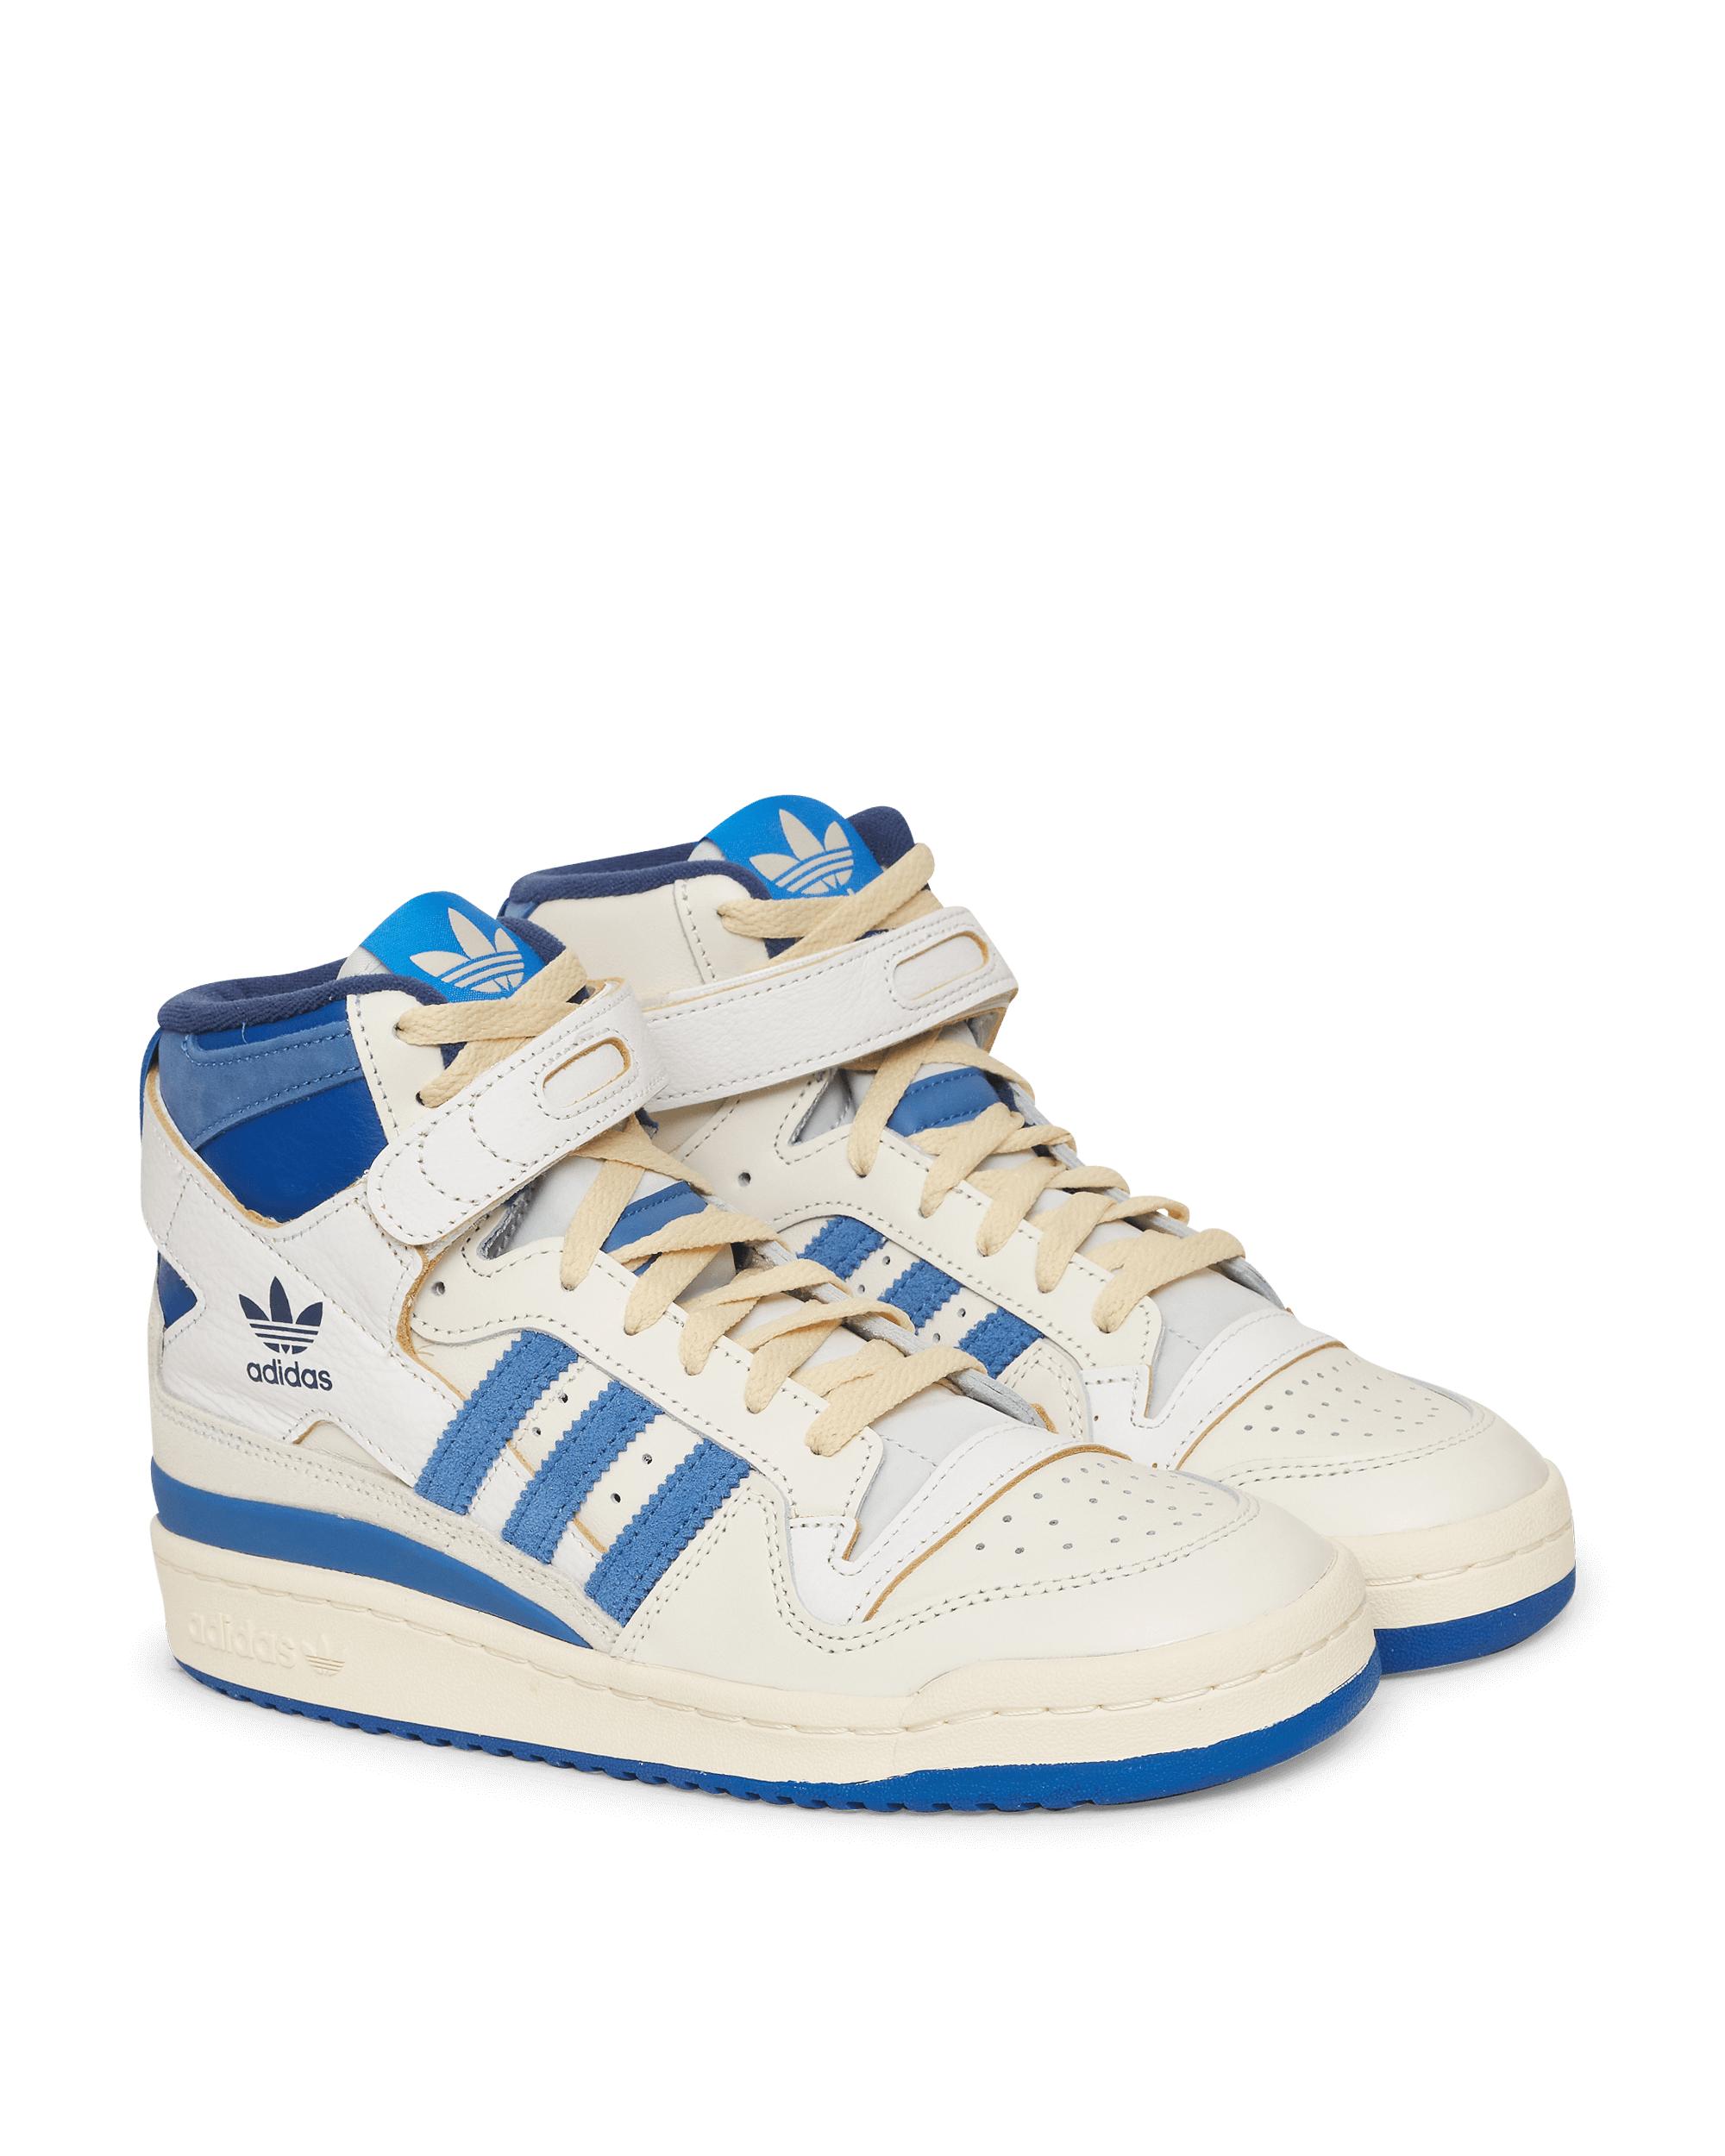 adidas Originals Forum 84 High Blue Thread Sneakers for Men | Lyst